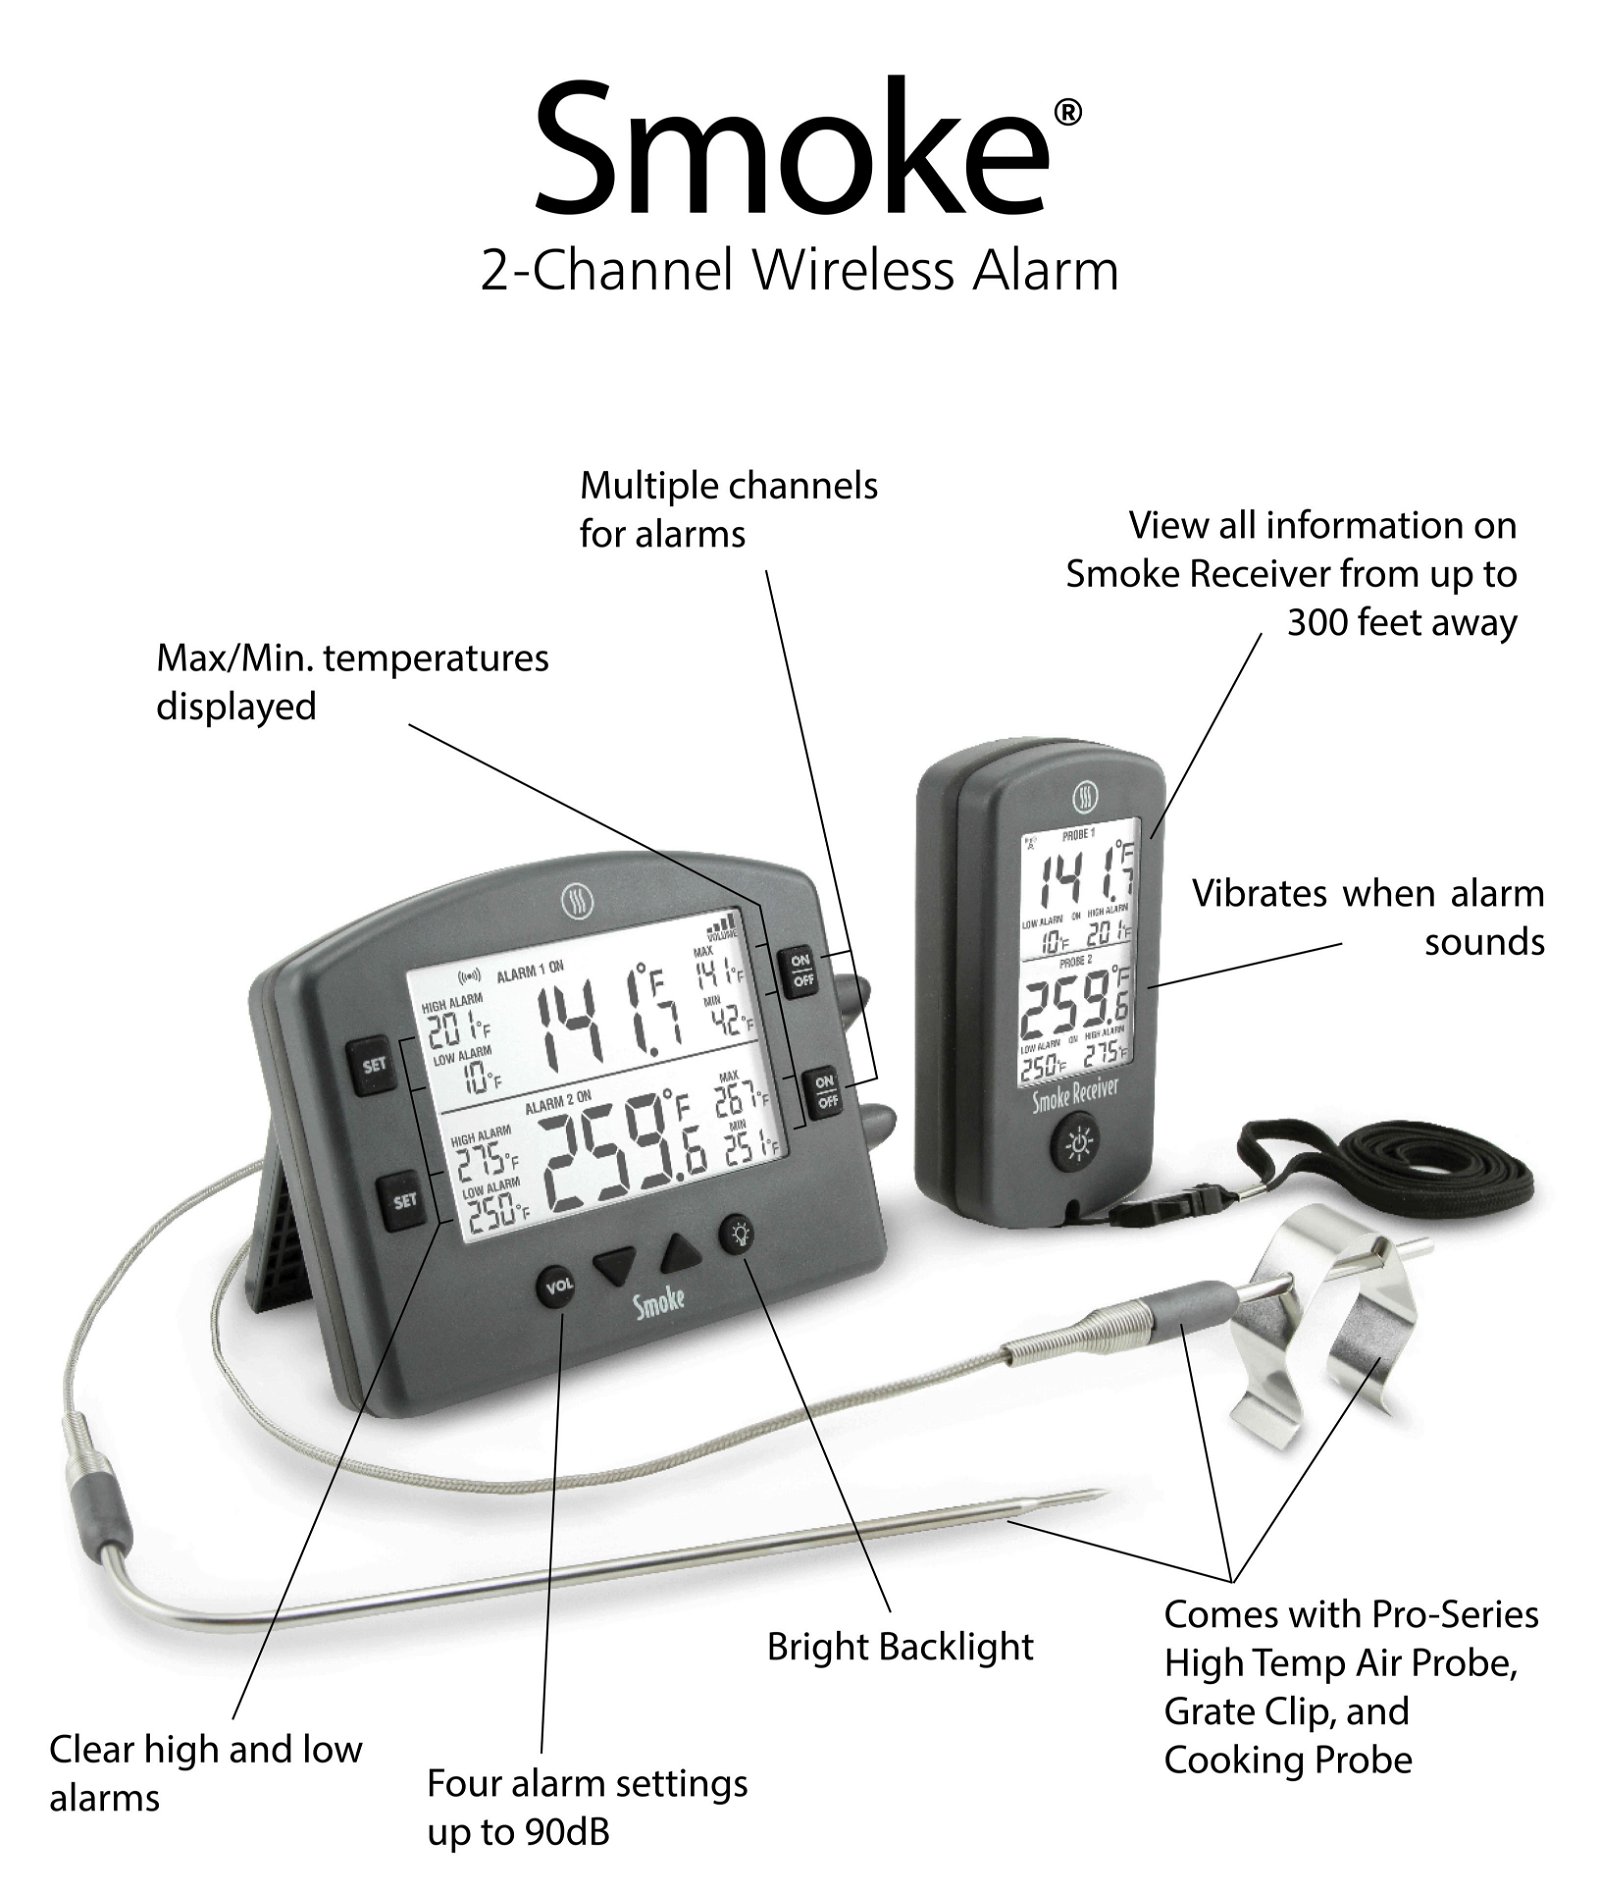 Smoke Infographic